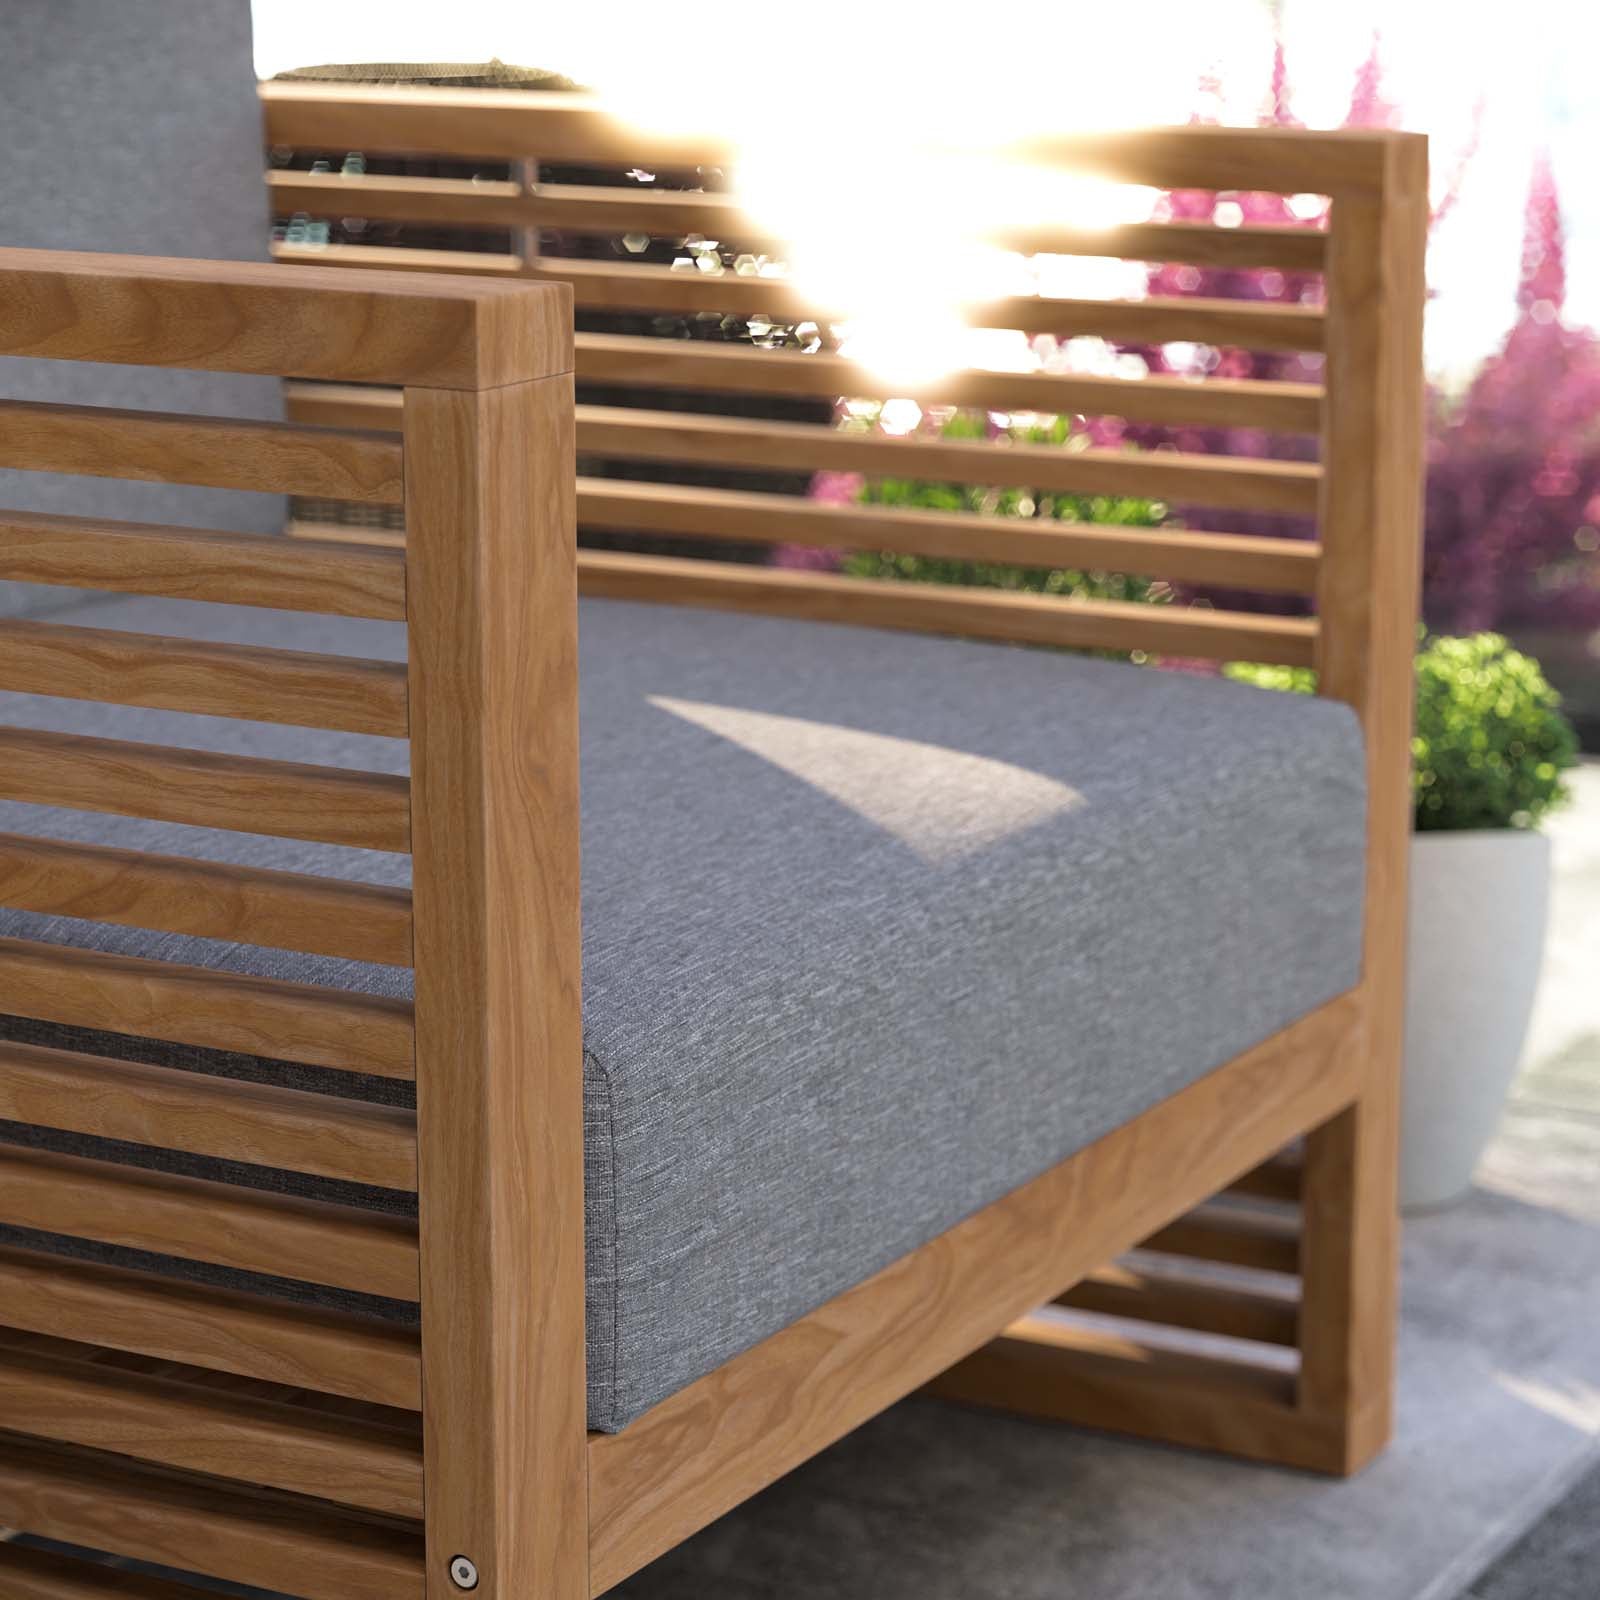 Carlsbad Teak Wood Outdoor Patio Armchair - East Shore Modern Home Furnishings